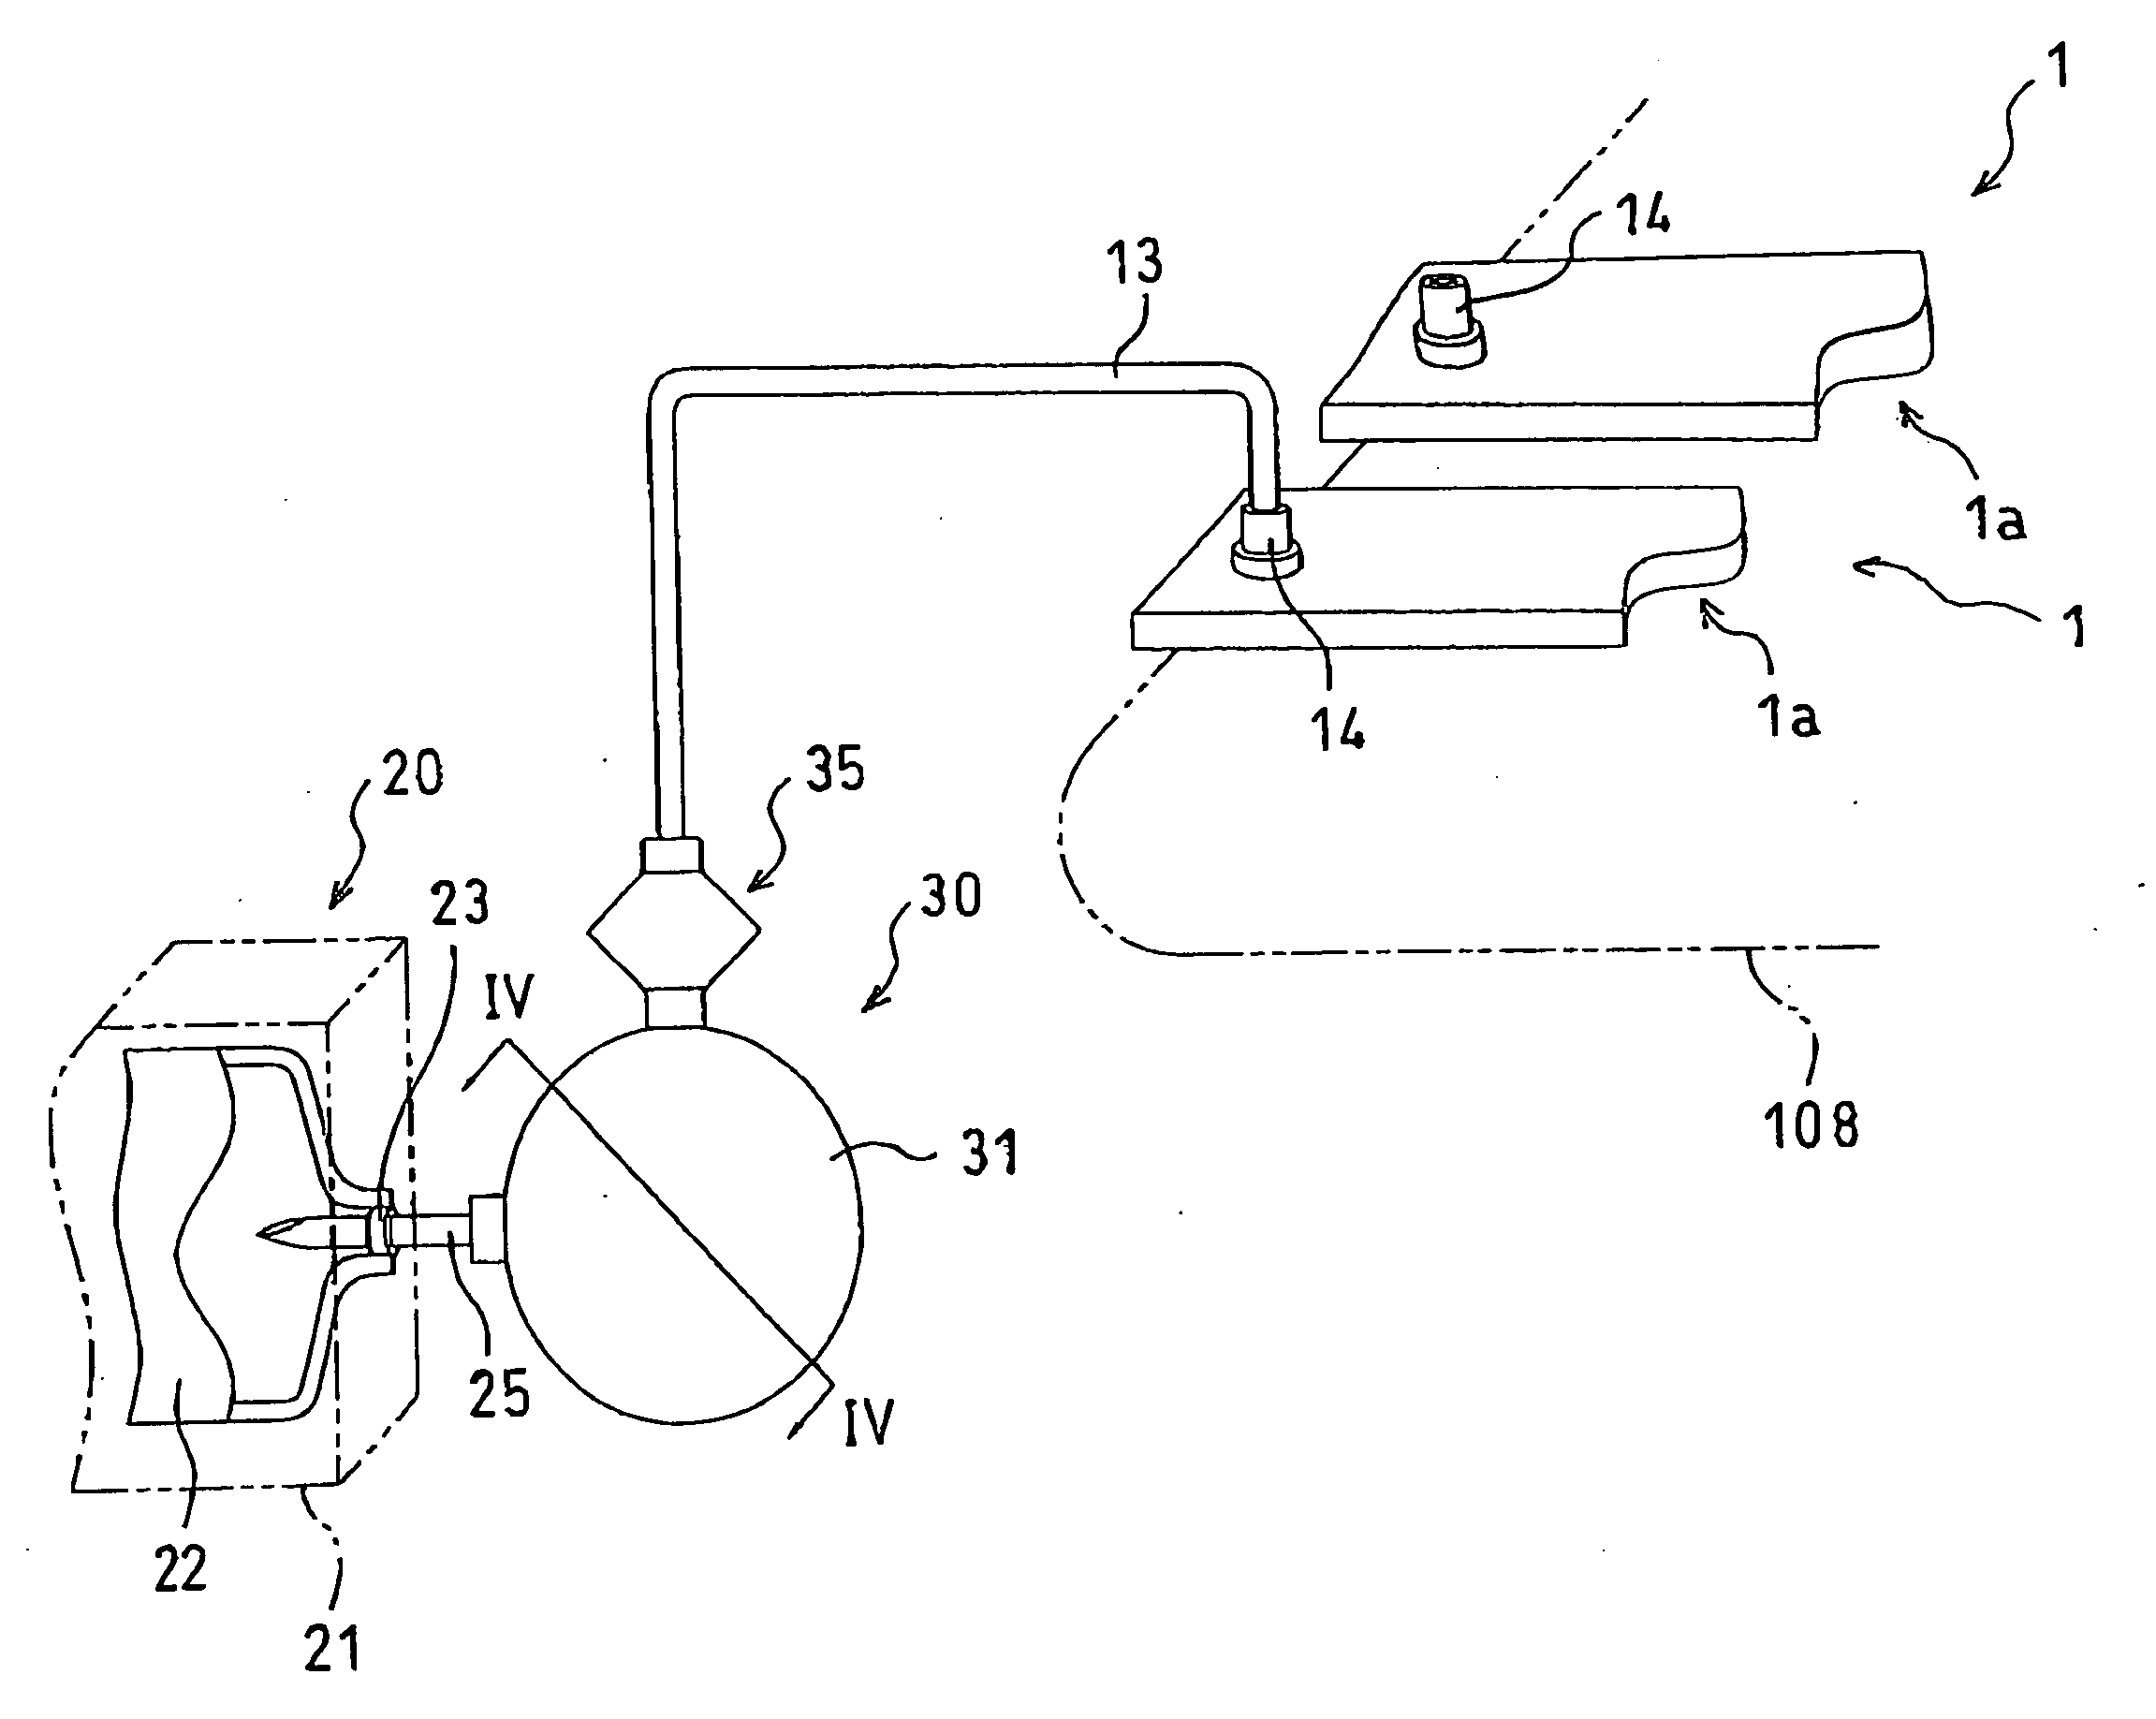 Ink-jet recording apparatus including pump, method for controlling the ink-jet recording apparatus, and method for controlling the pump